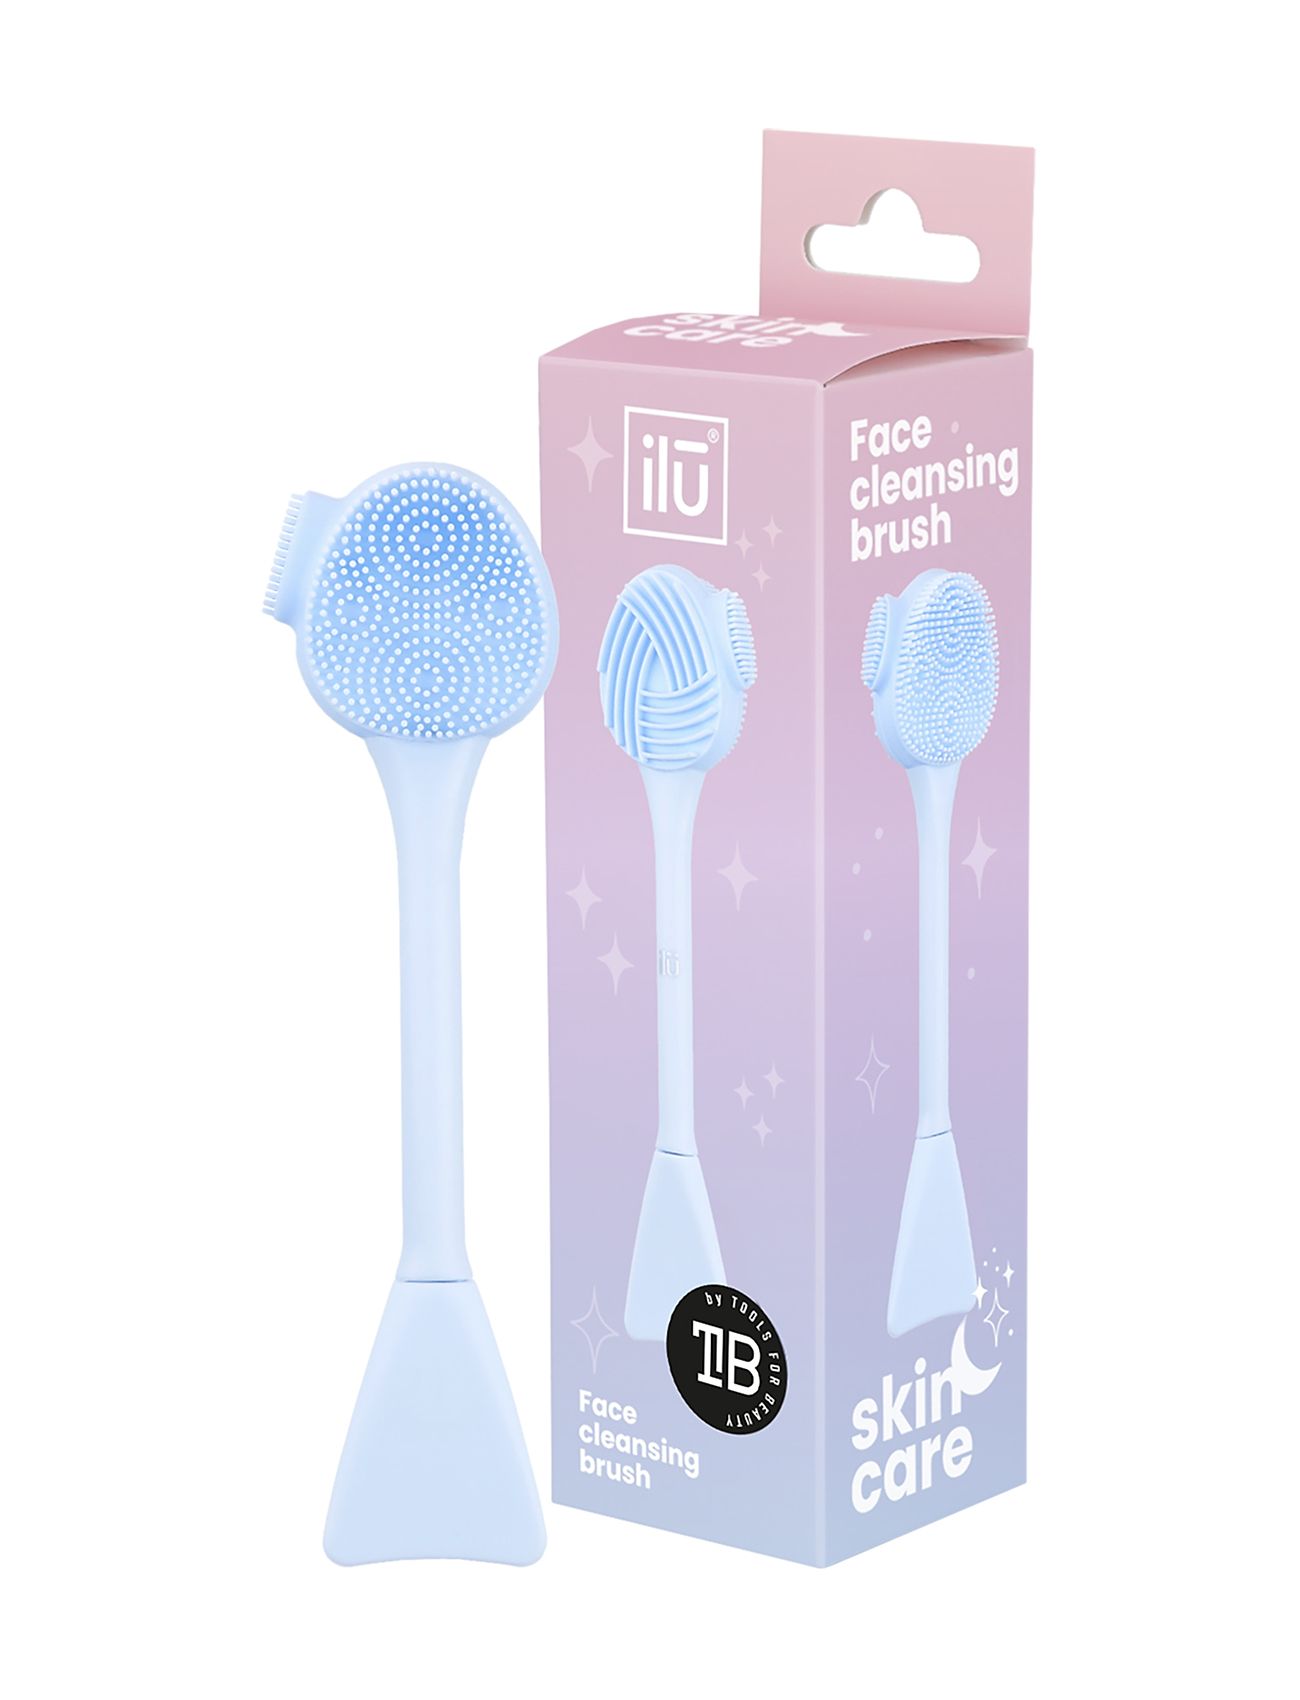 Ilu Face Cleansing Brush Blue Beauty Women Skin Care Face Cleansers Accessories Nude ILU